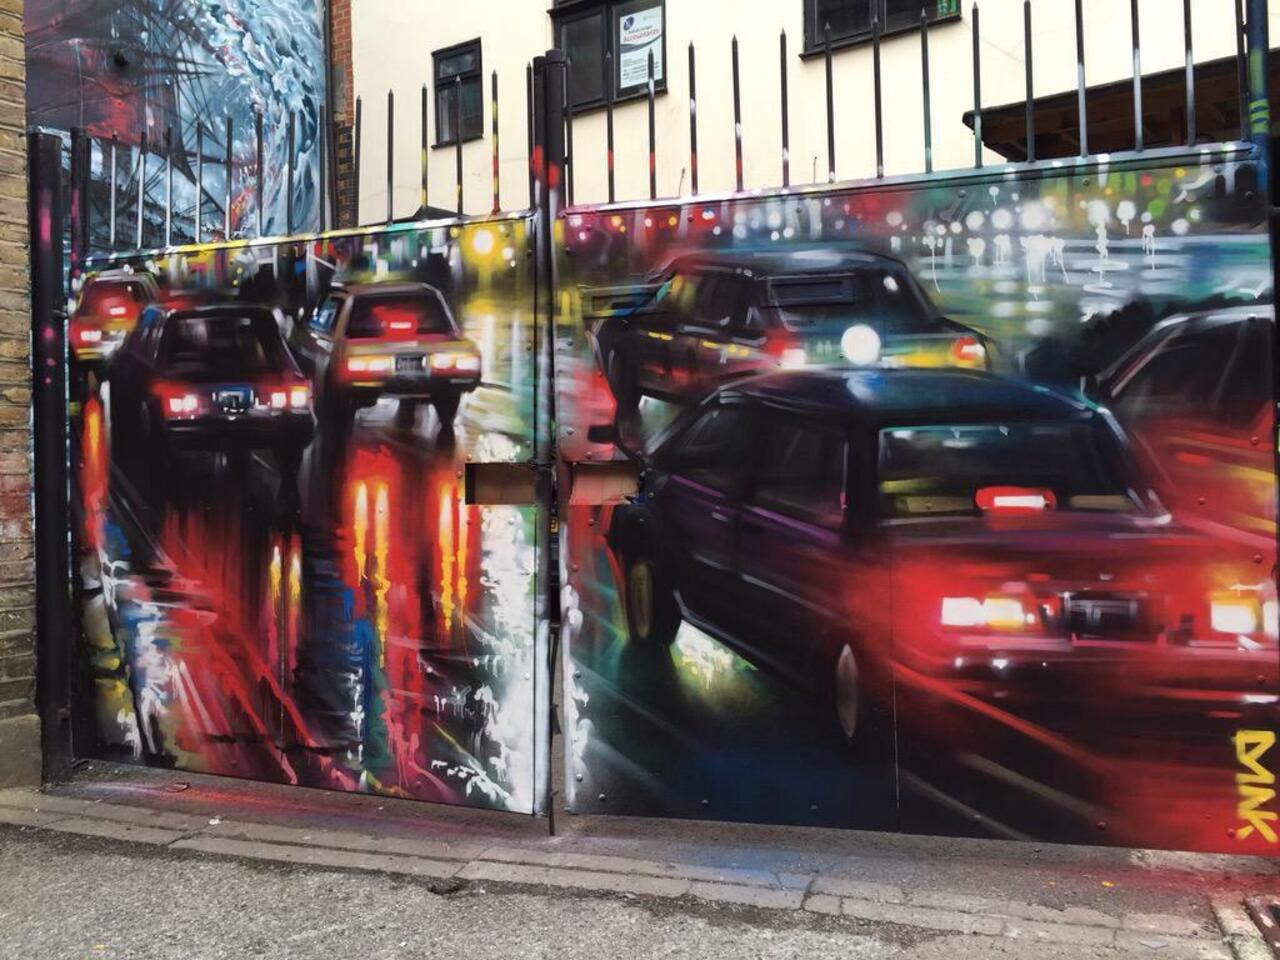 New Street Art by DanKitchener in Brick Lane London 

#art #graffiti #mural #streetart http://t.co/hzqZAVxZYw